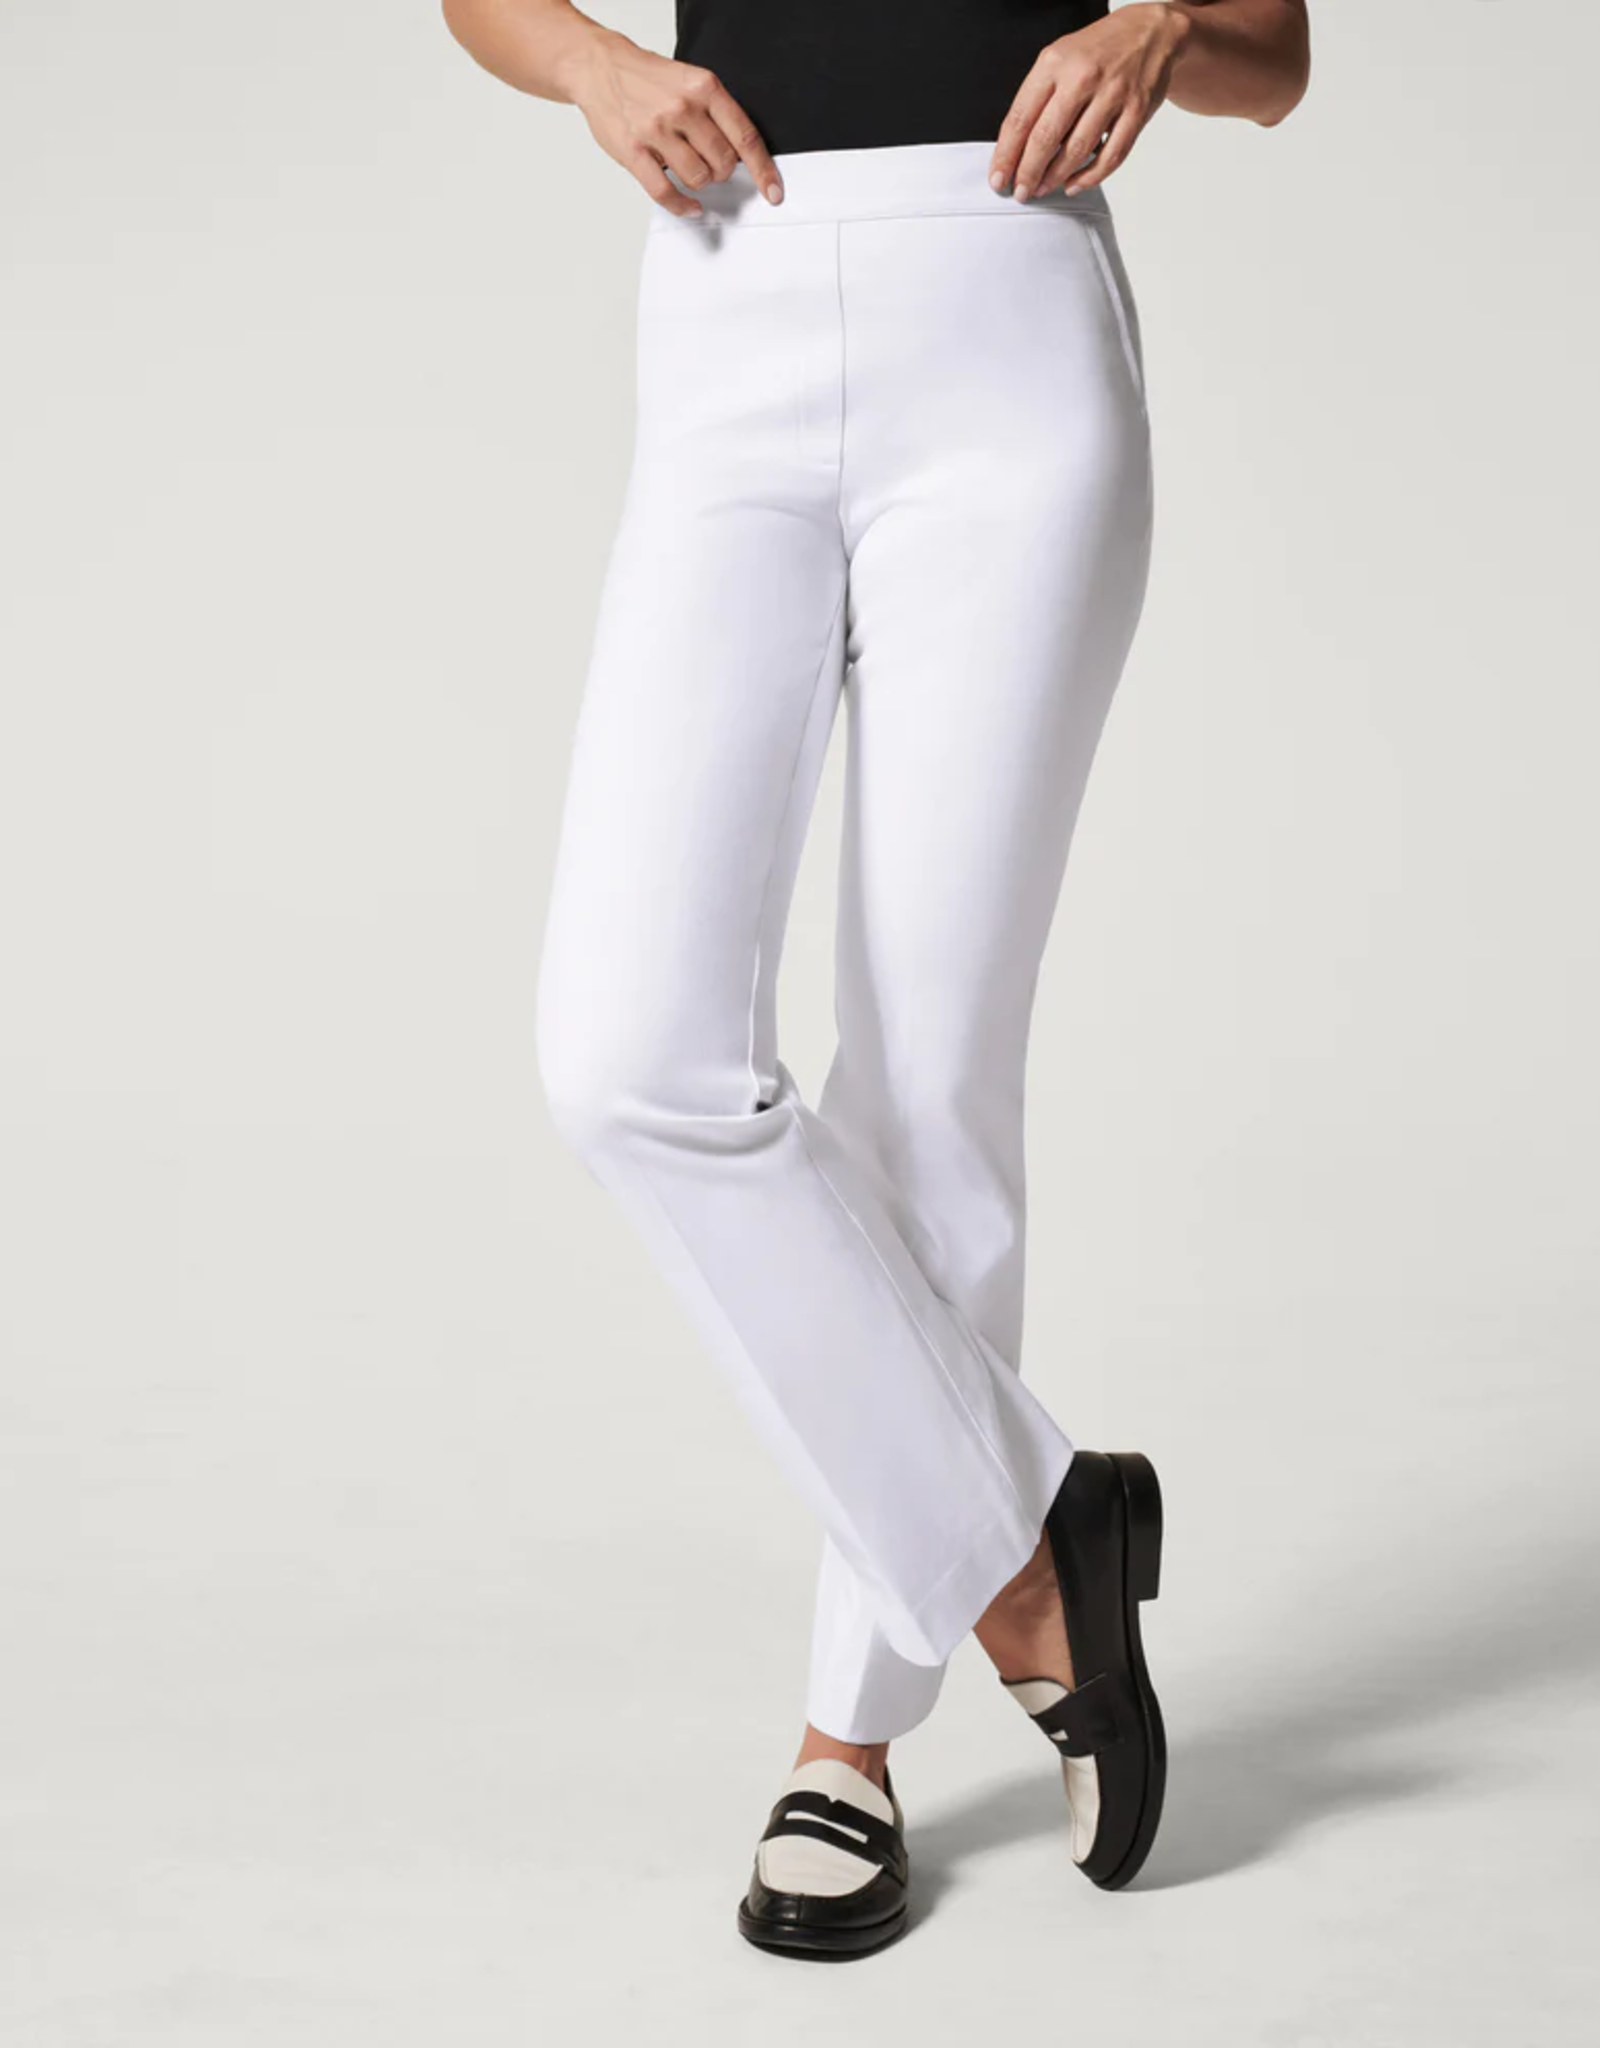 NWT Spanx Kick Flare Pull On Pants Classic White Medium Petite NEW Pockets  $148 